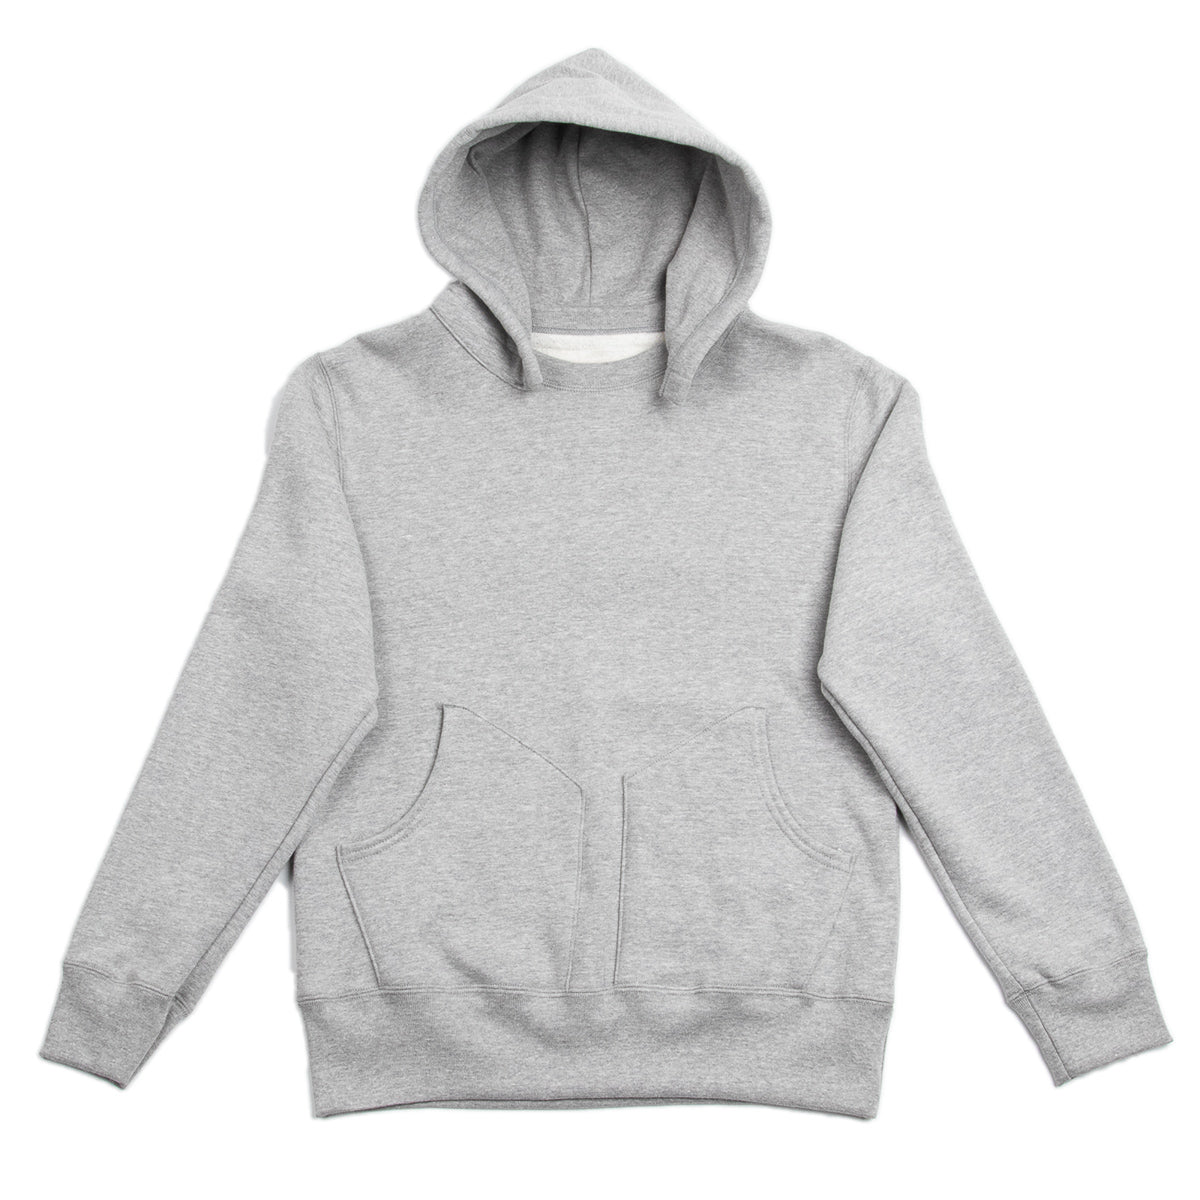 Original Rare supreme hoodie for sale. Medium size